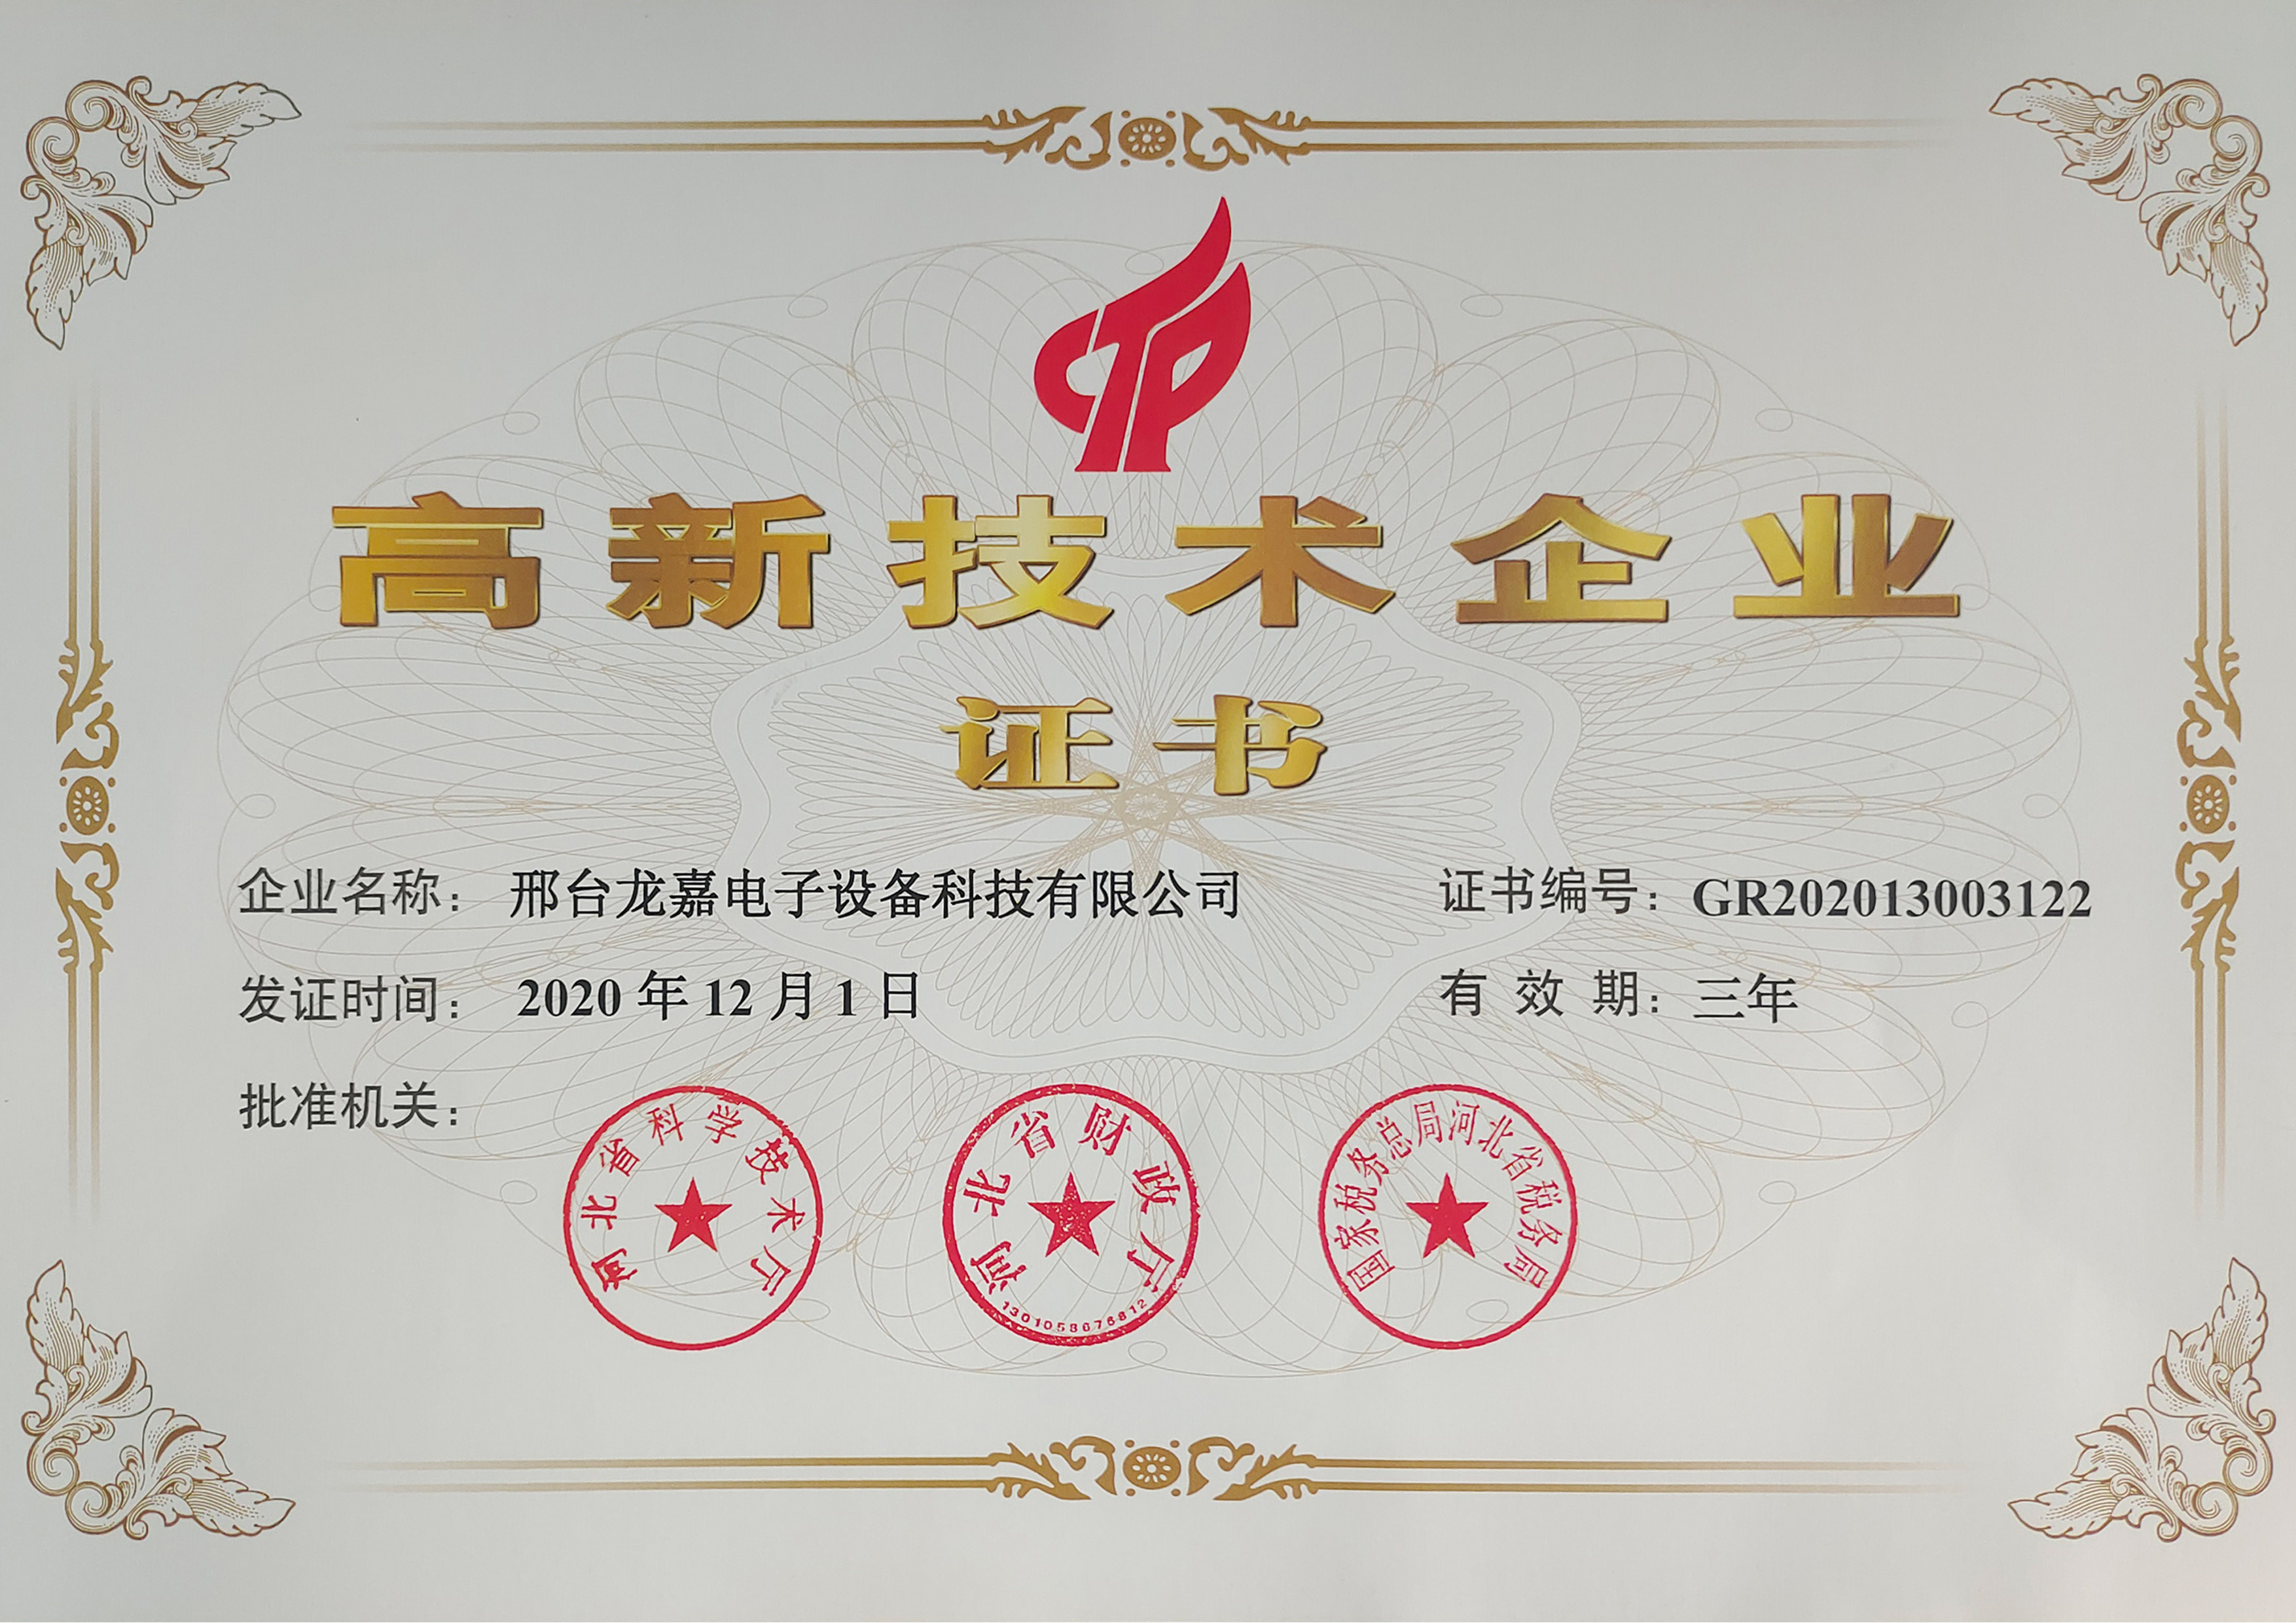 Good news: xingtai longjia electronic equipment technology co., LTD has been recognized as a high-tech enterprise